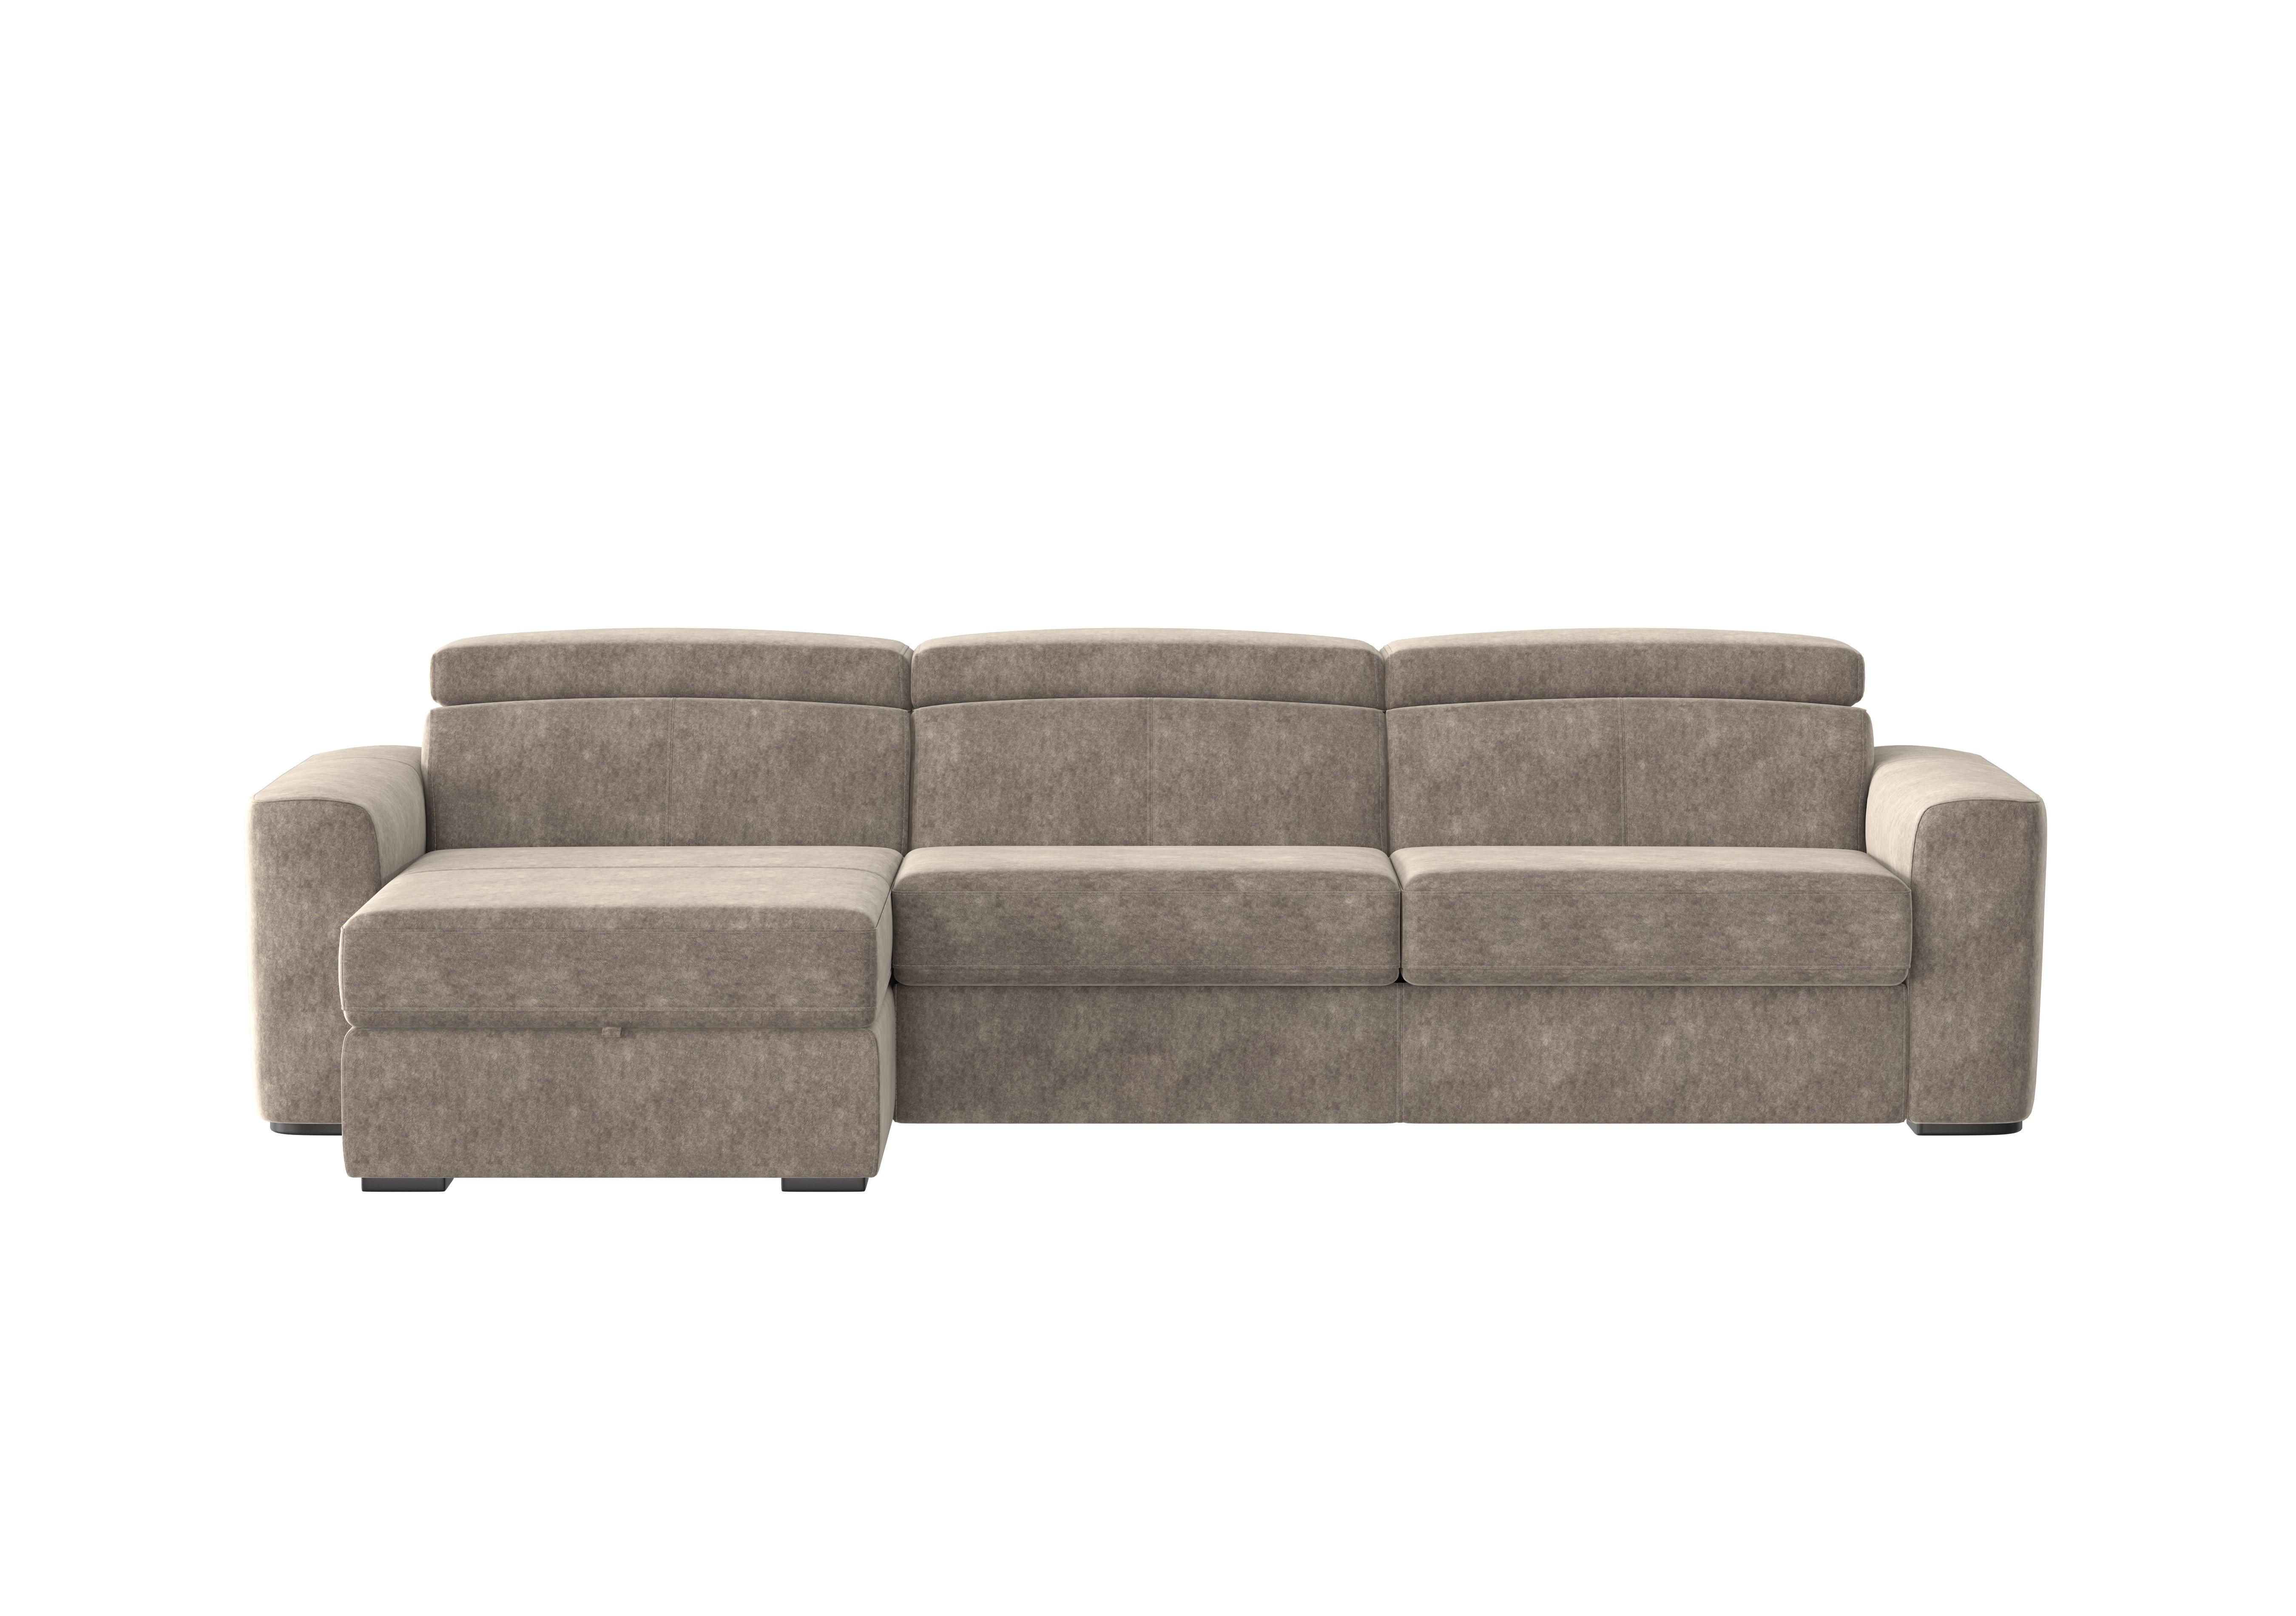 Infinity Fabric Corner Chaise Sofa Bed with Storage in Bfa-Bnn-R29 Fv1 Mink on Furniture Village